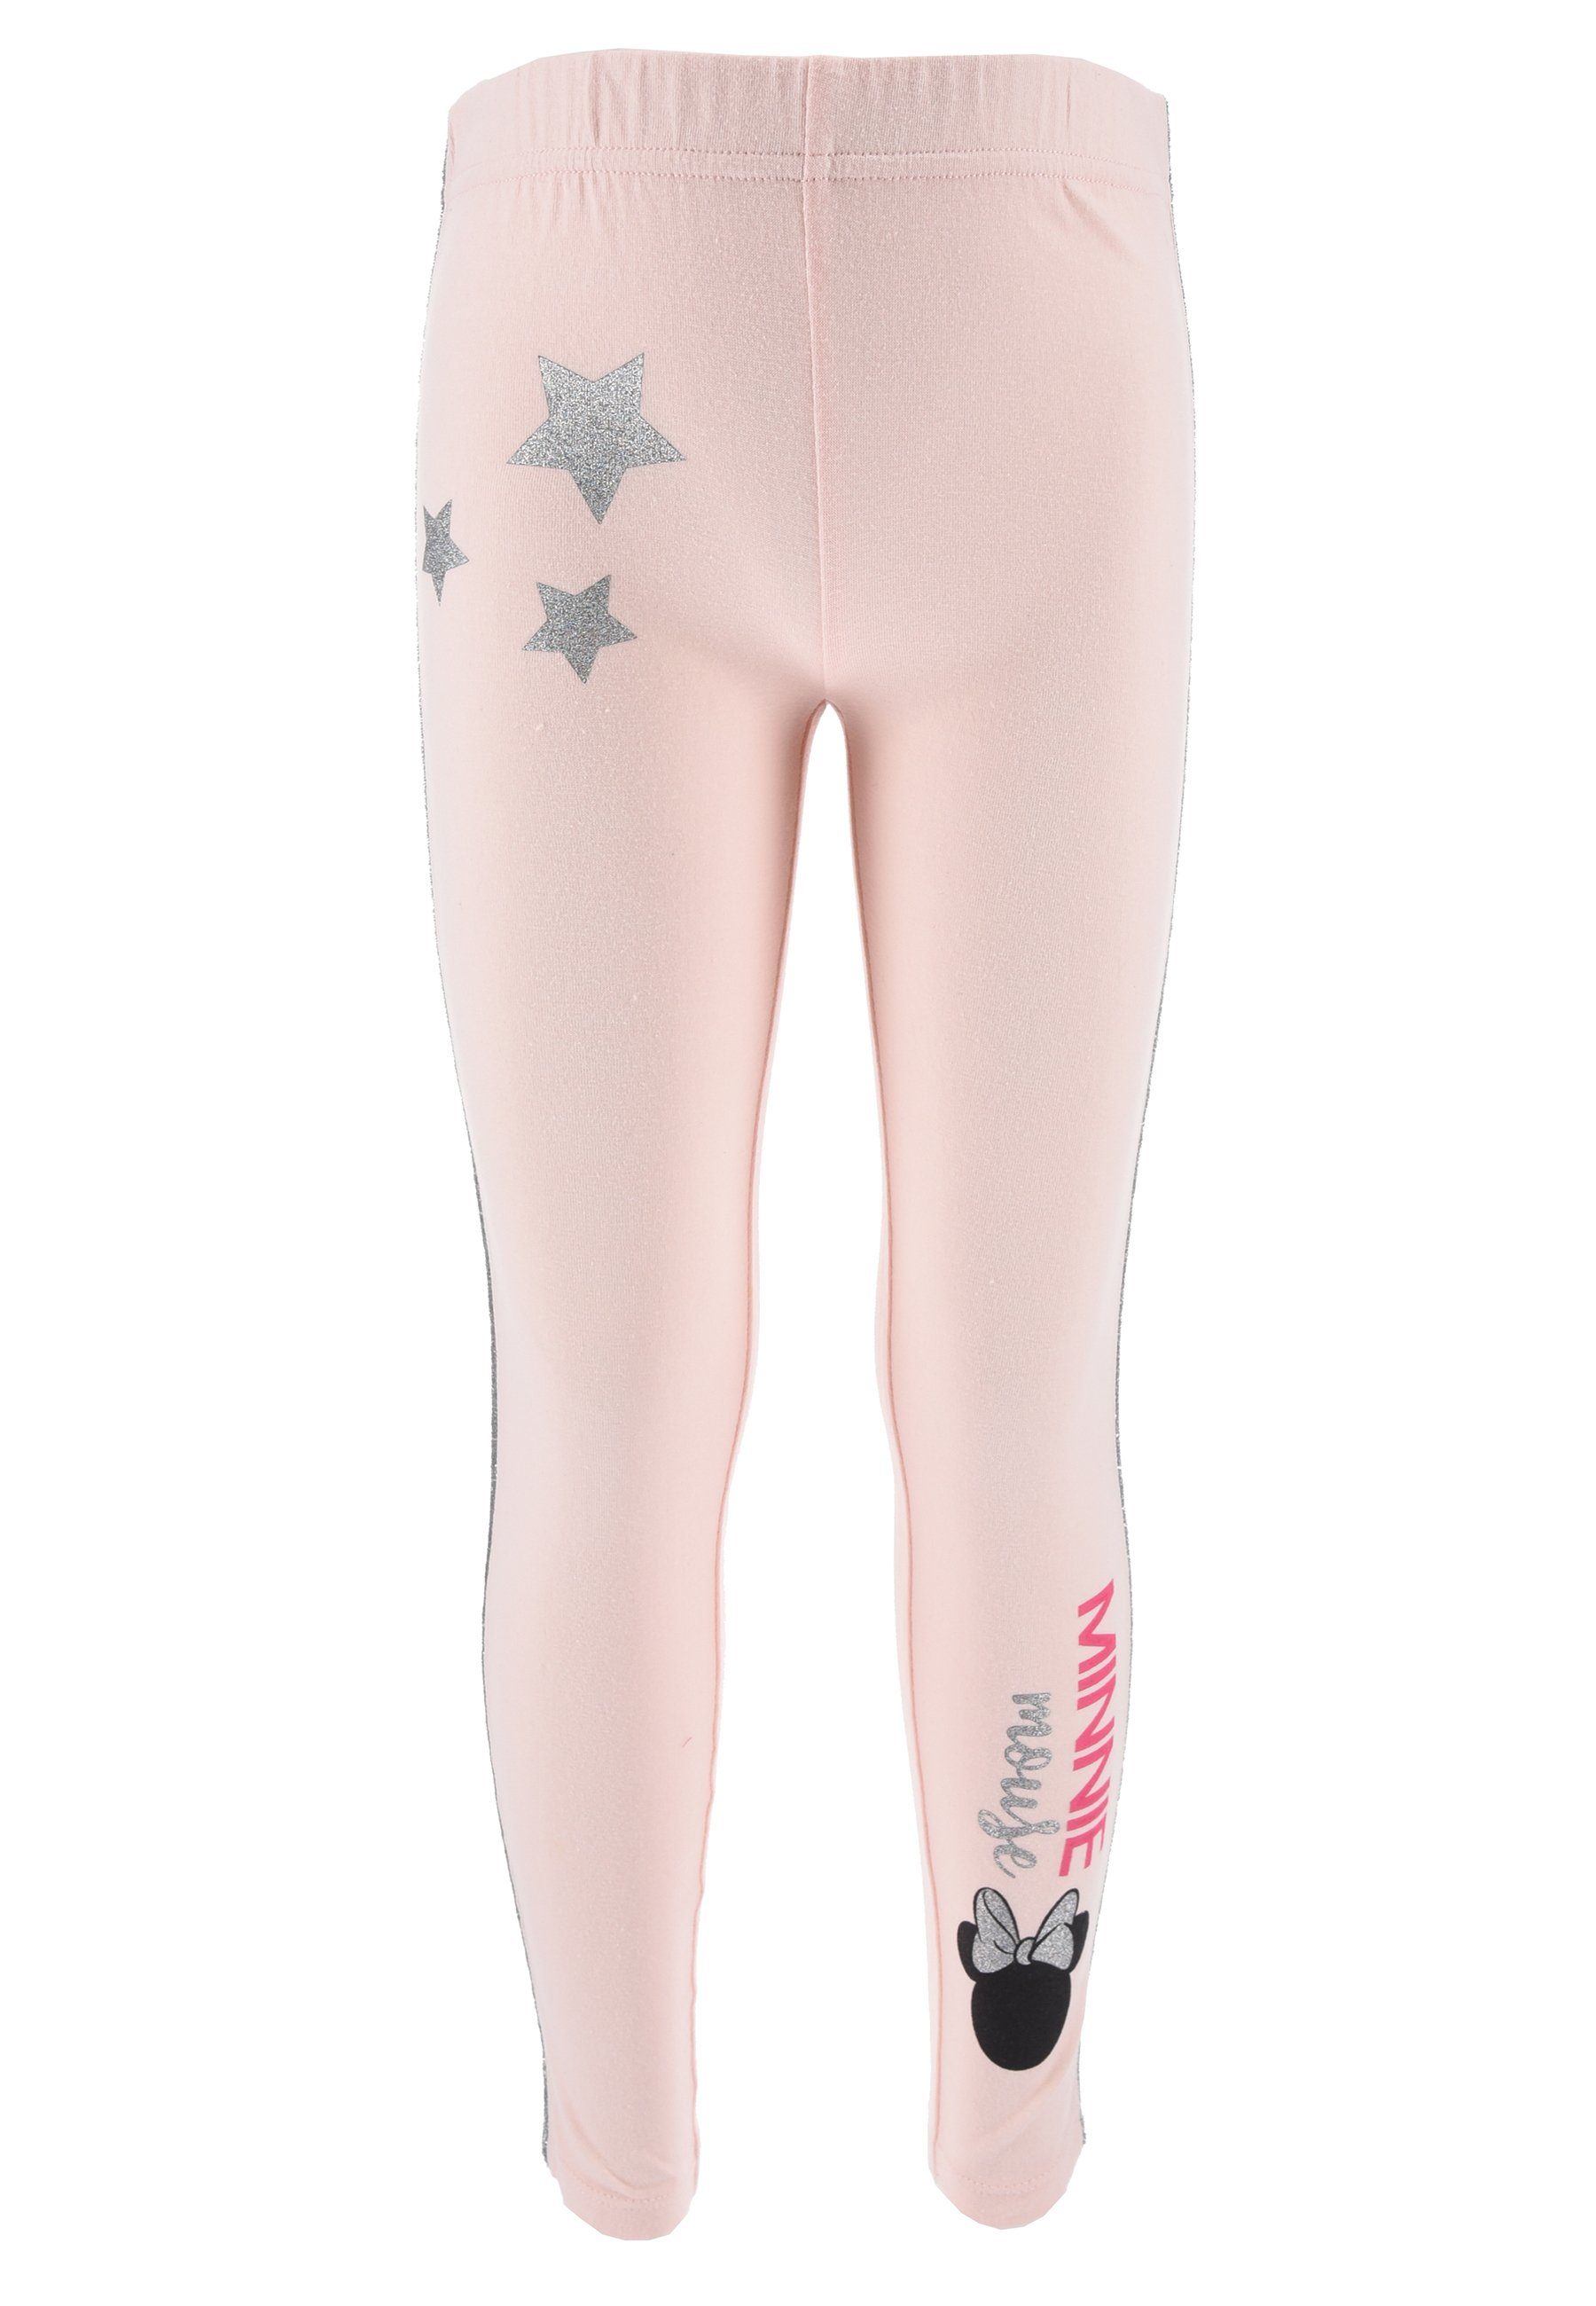 Disney Minnie Mouse Leggings Mädchen Kinder Leggings Sporthose Elastische Hose mit Glitzer Print Mini Maus Pink